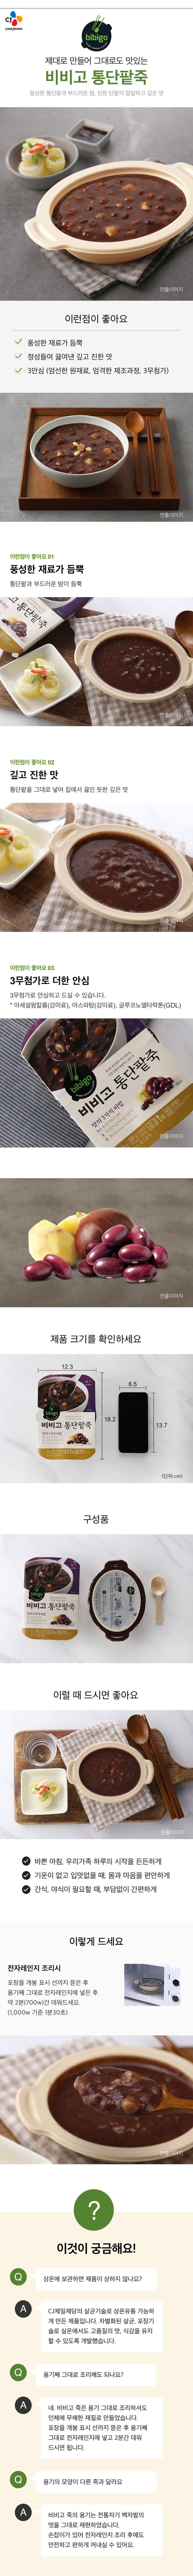 韓國食品-[CJ] Bibigo Rice Porridge with Red Bean 280g